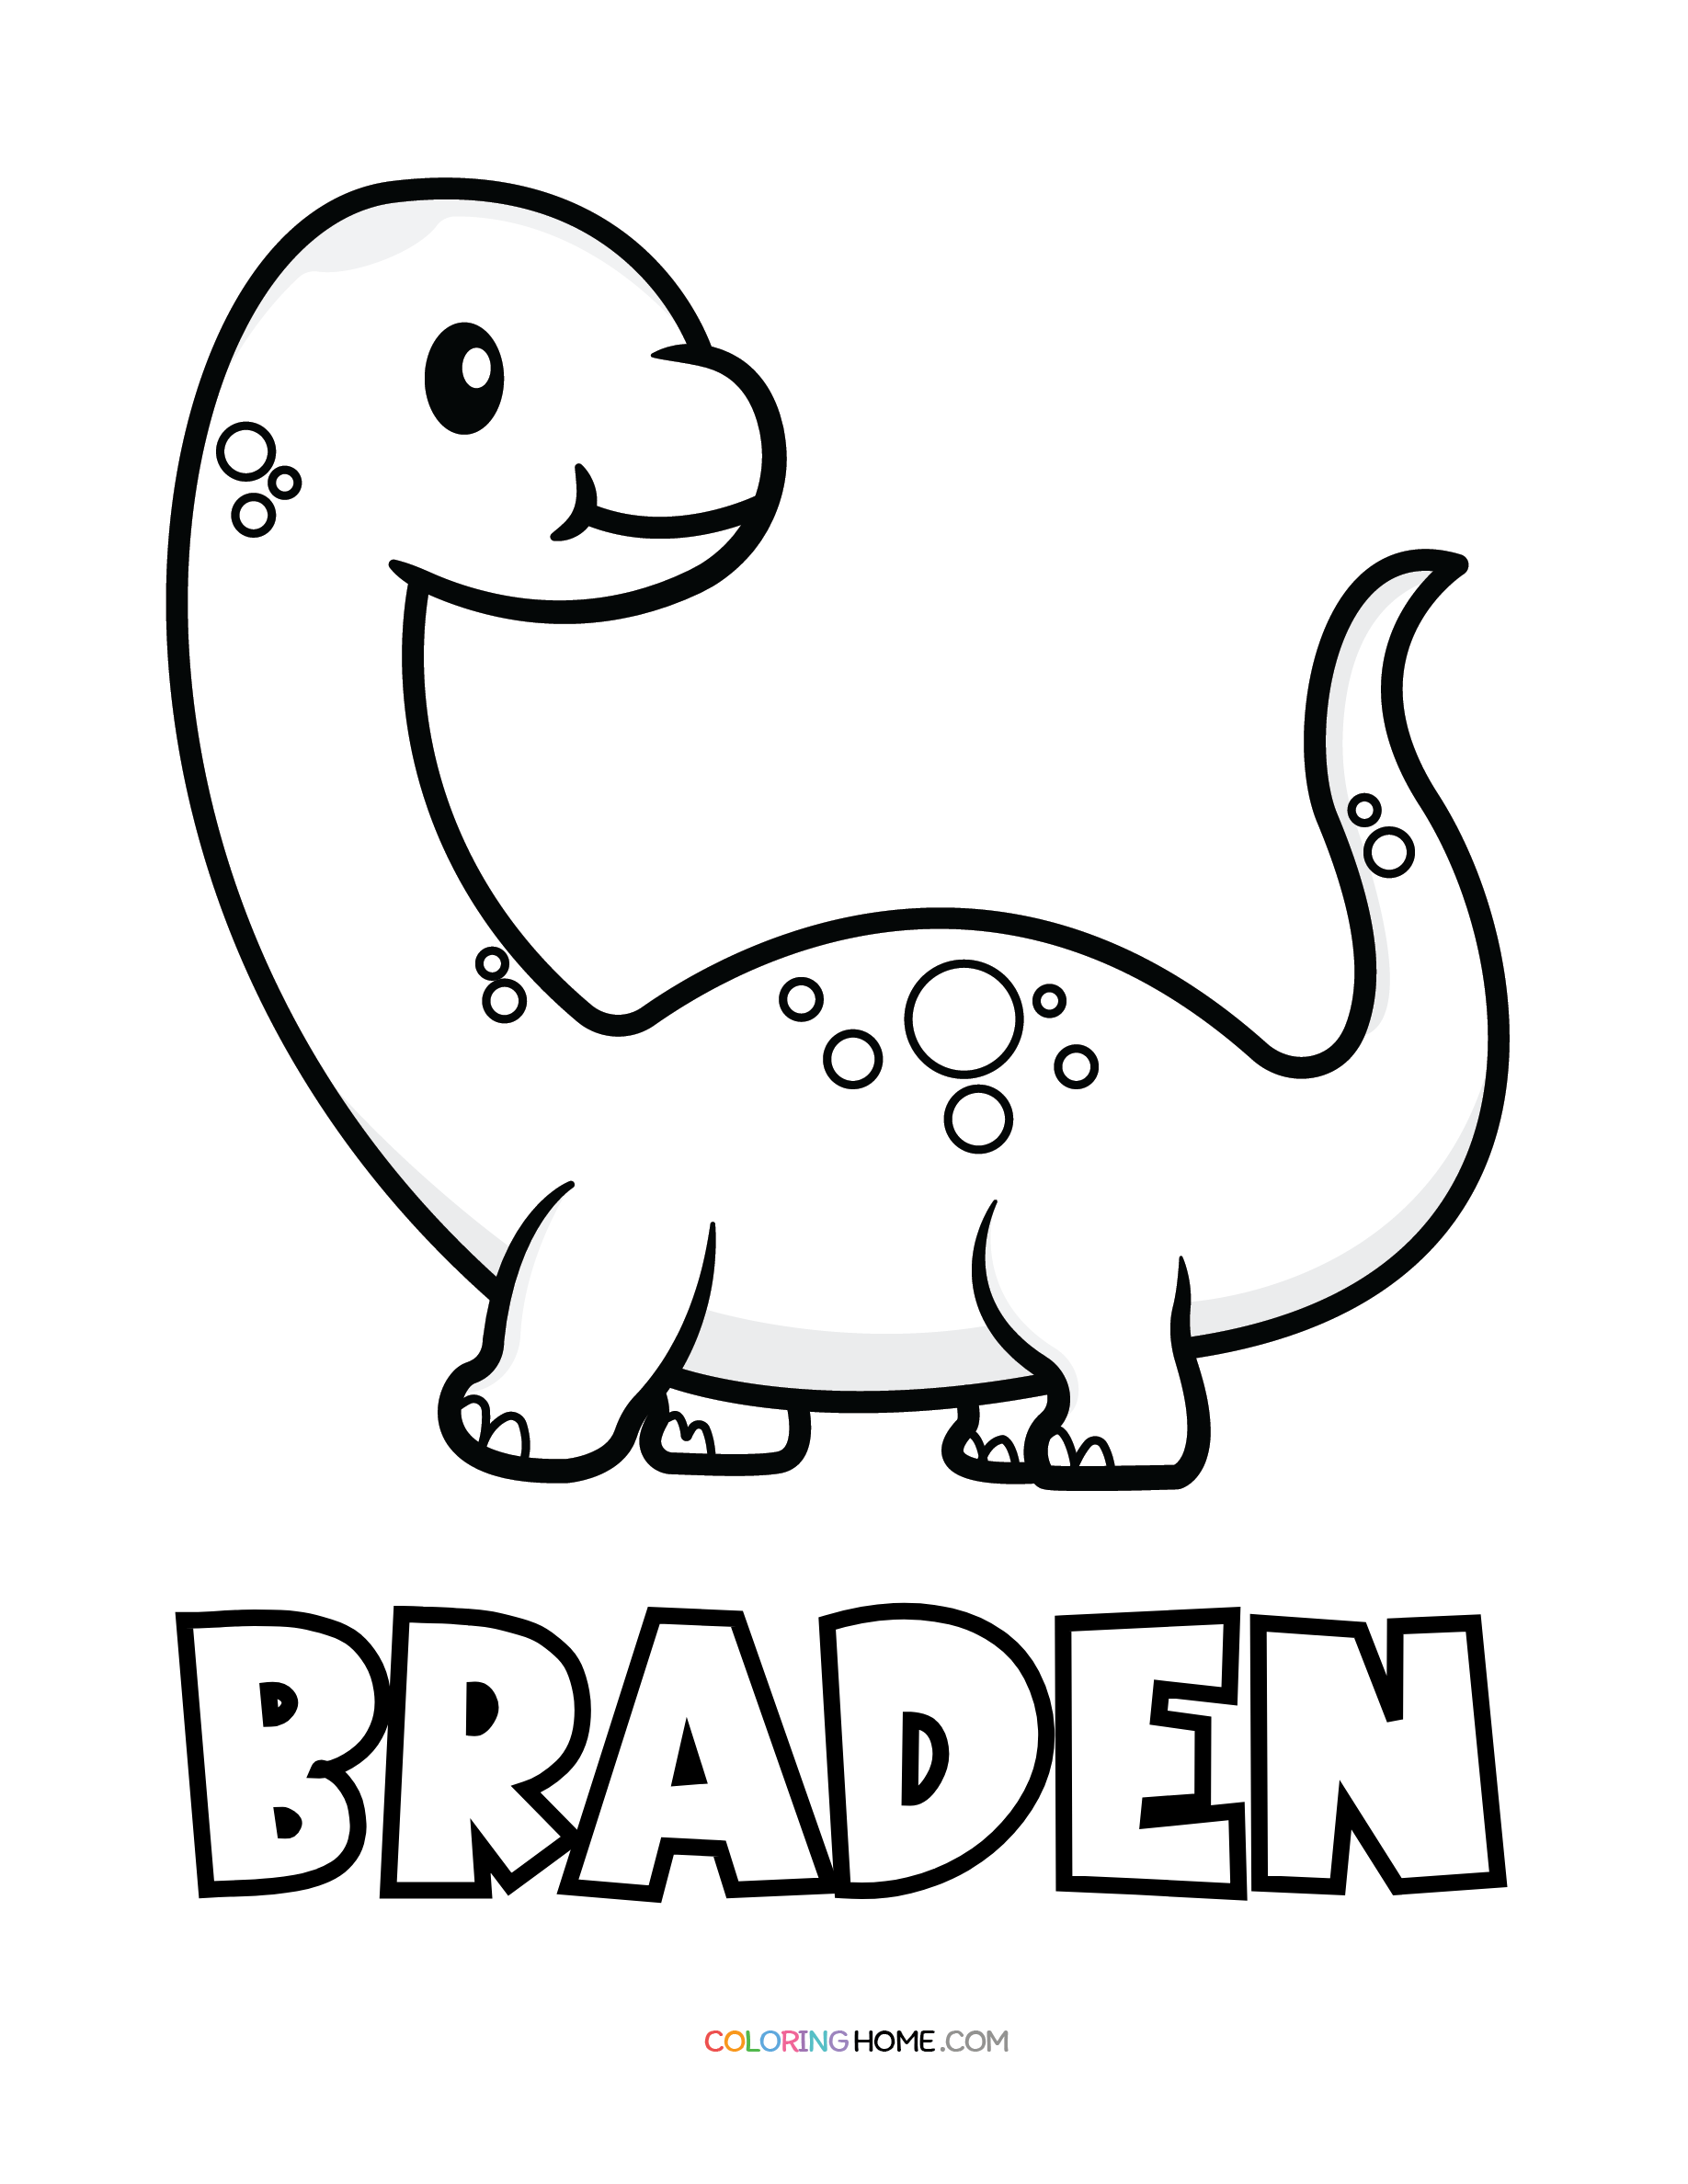 Braden dinosaur coloring page